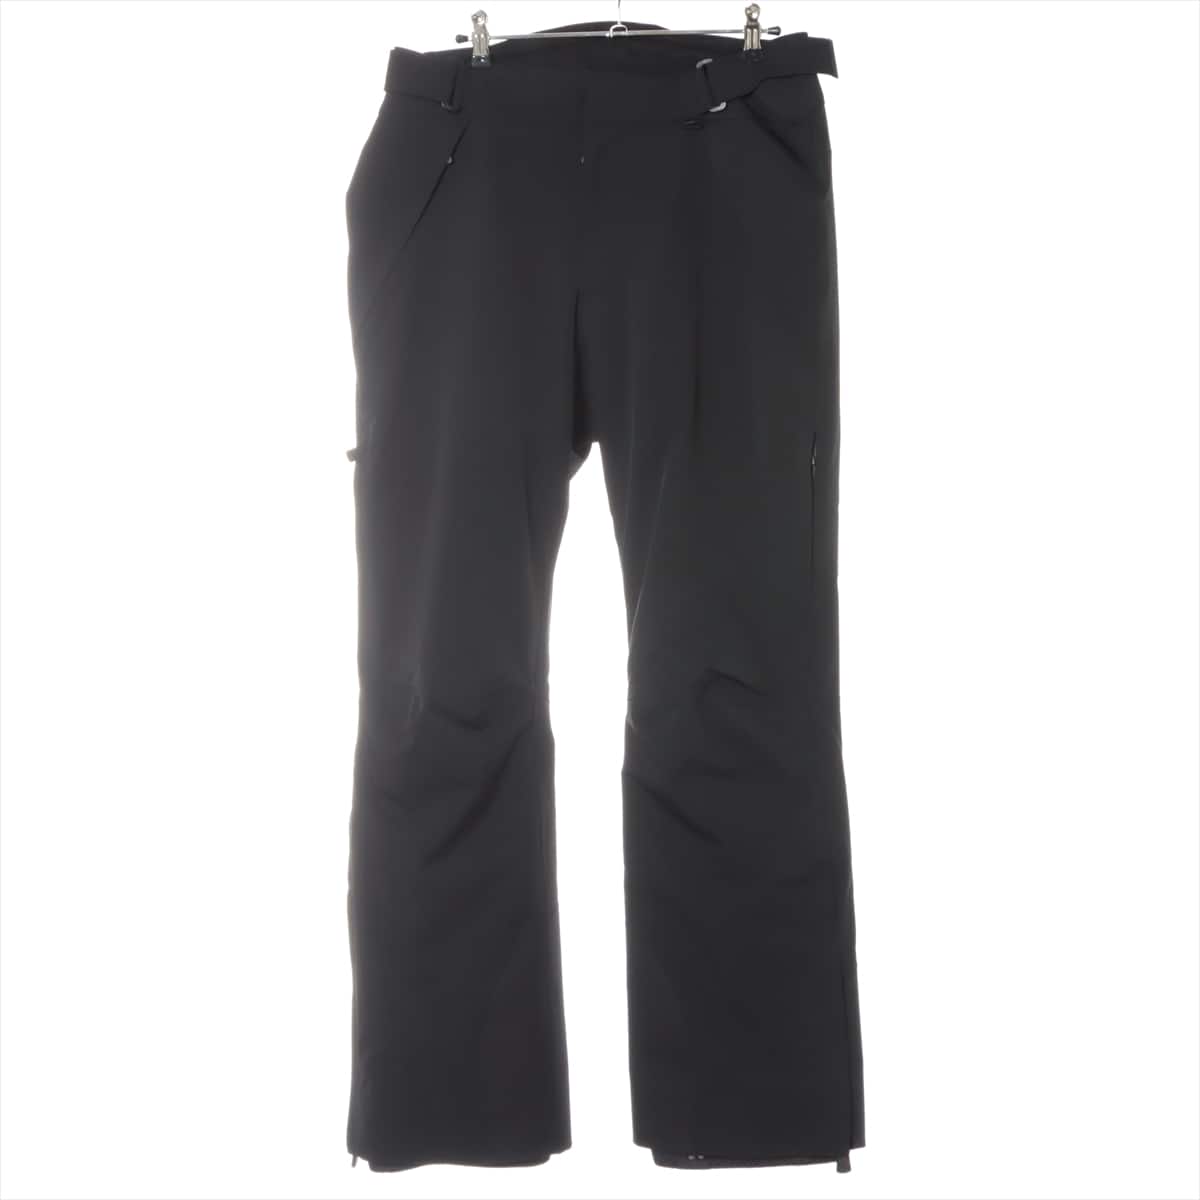 Moncler Grenoble 21 years Nylon x polyurethane Pants M Ladies' Black  TROUSERS